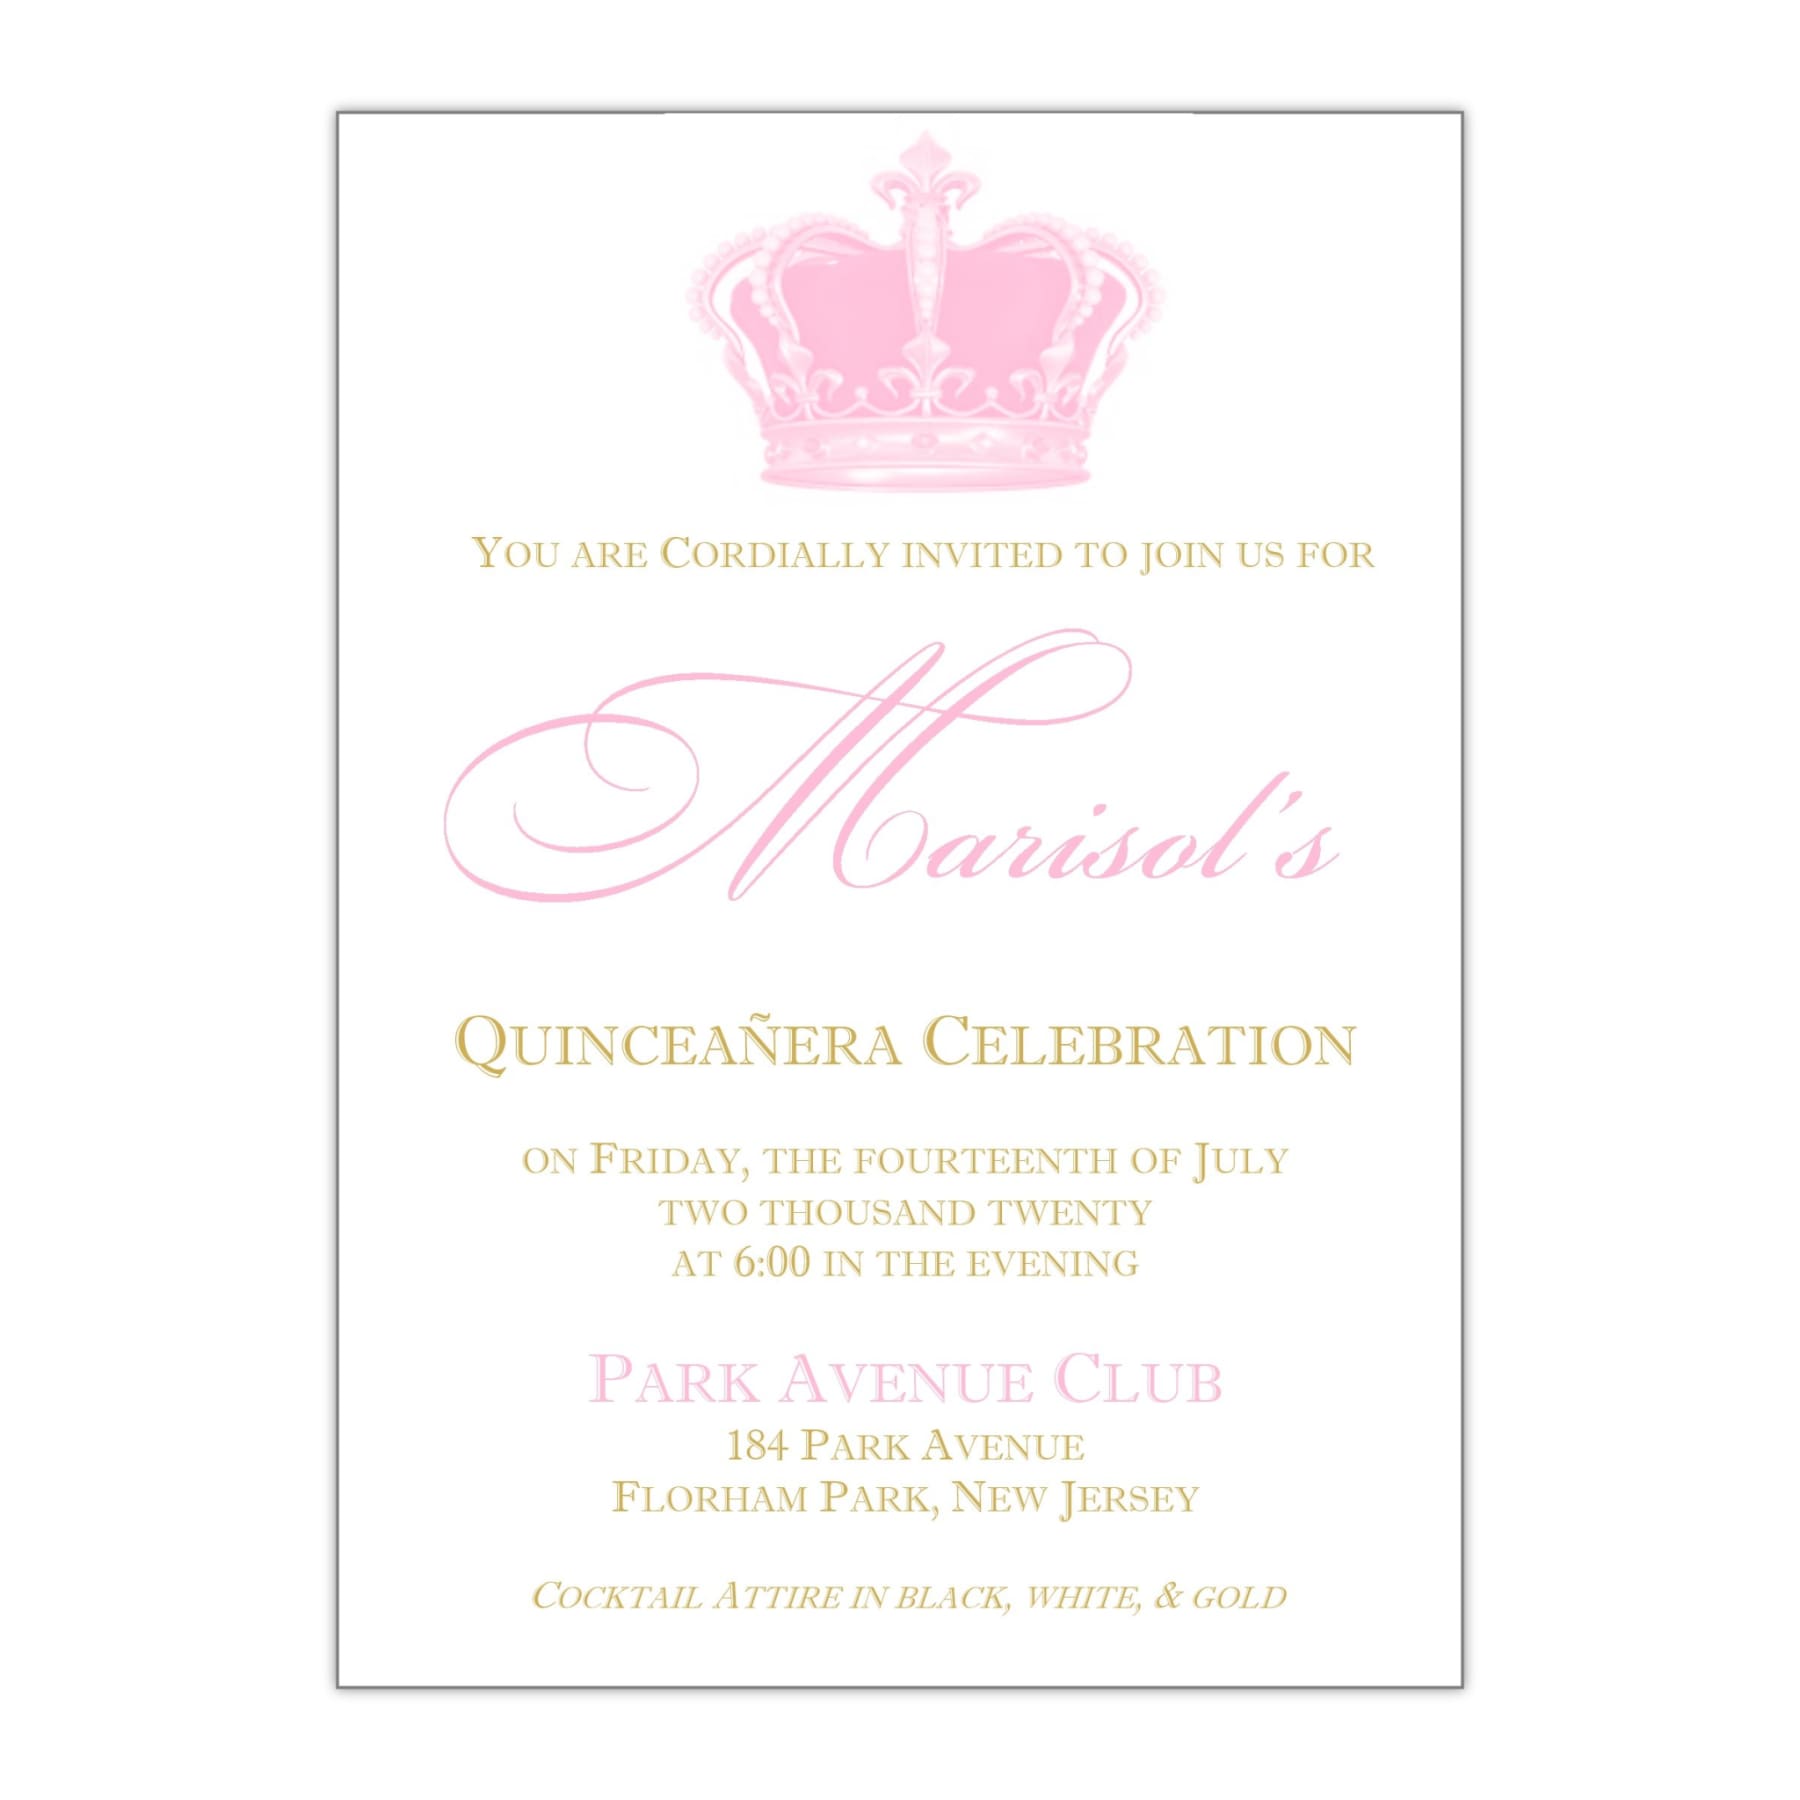 Royal Quinceanera Invitation - All That Glitters Invitations